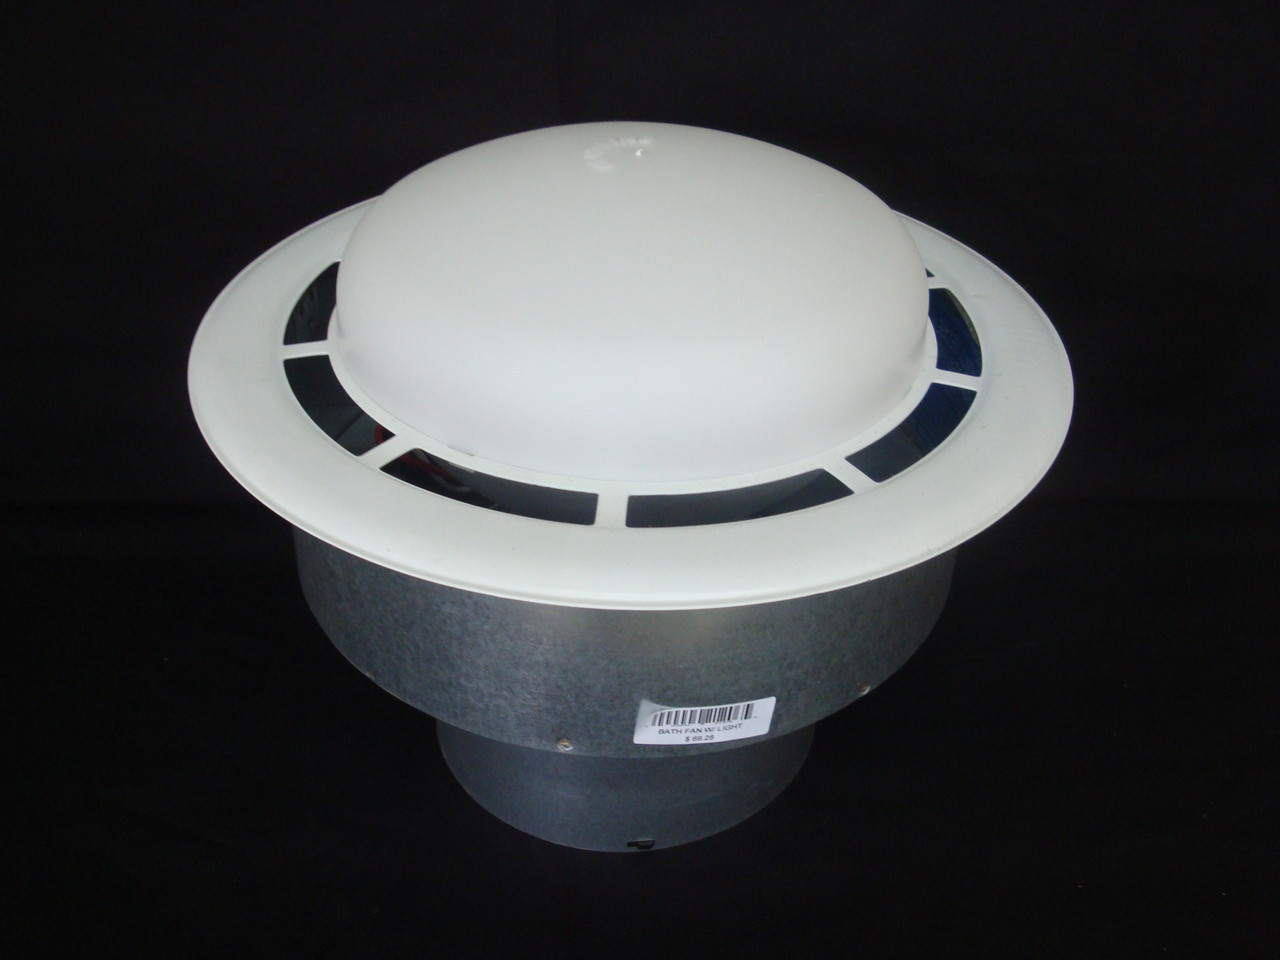 Mobile Home Bathroom Fan with light, Ventline brand bath